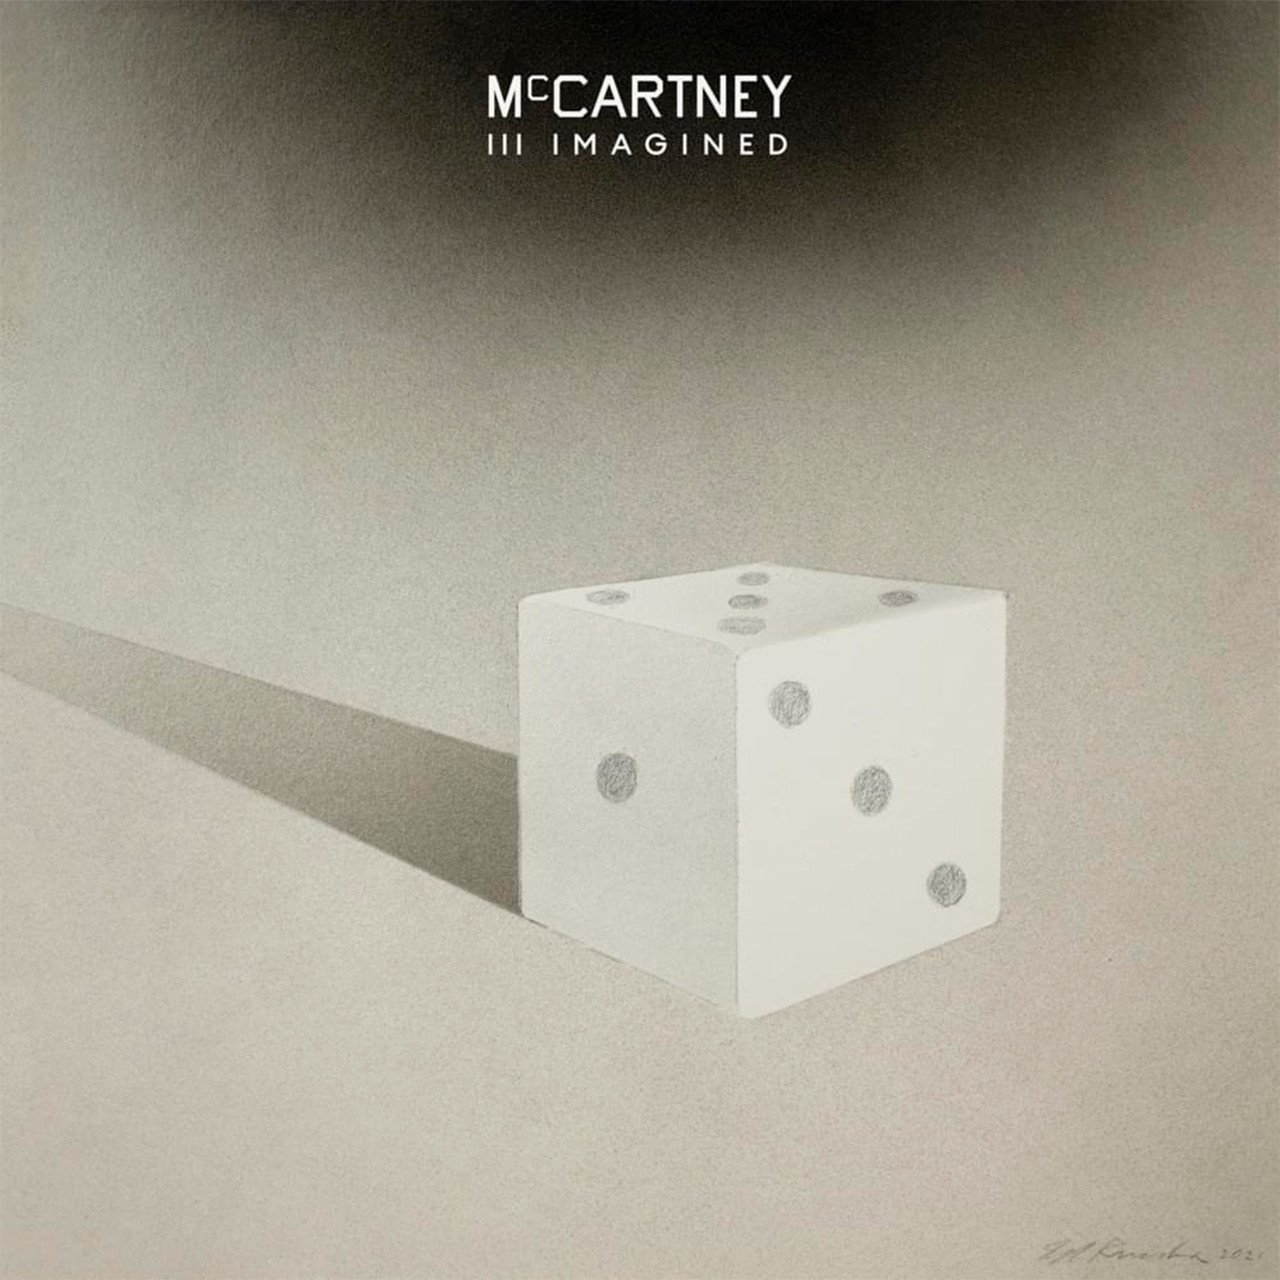 Рок Capitol US Paul McCartney - McCartney III Imagined рок ume usm mccartney paul thrillington